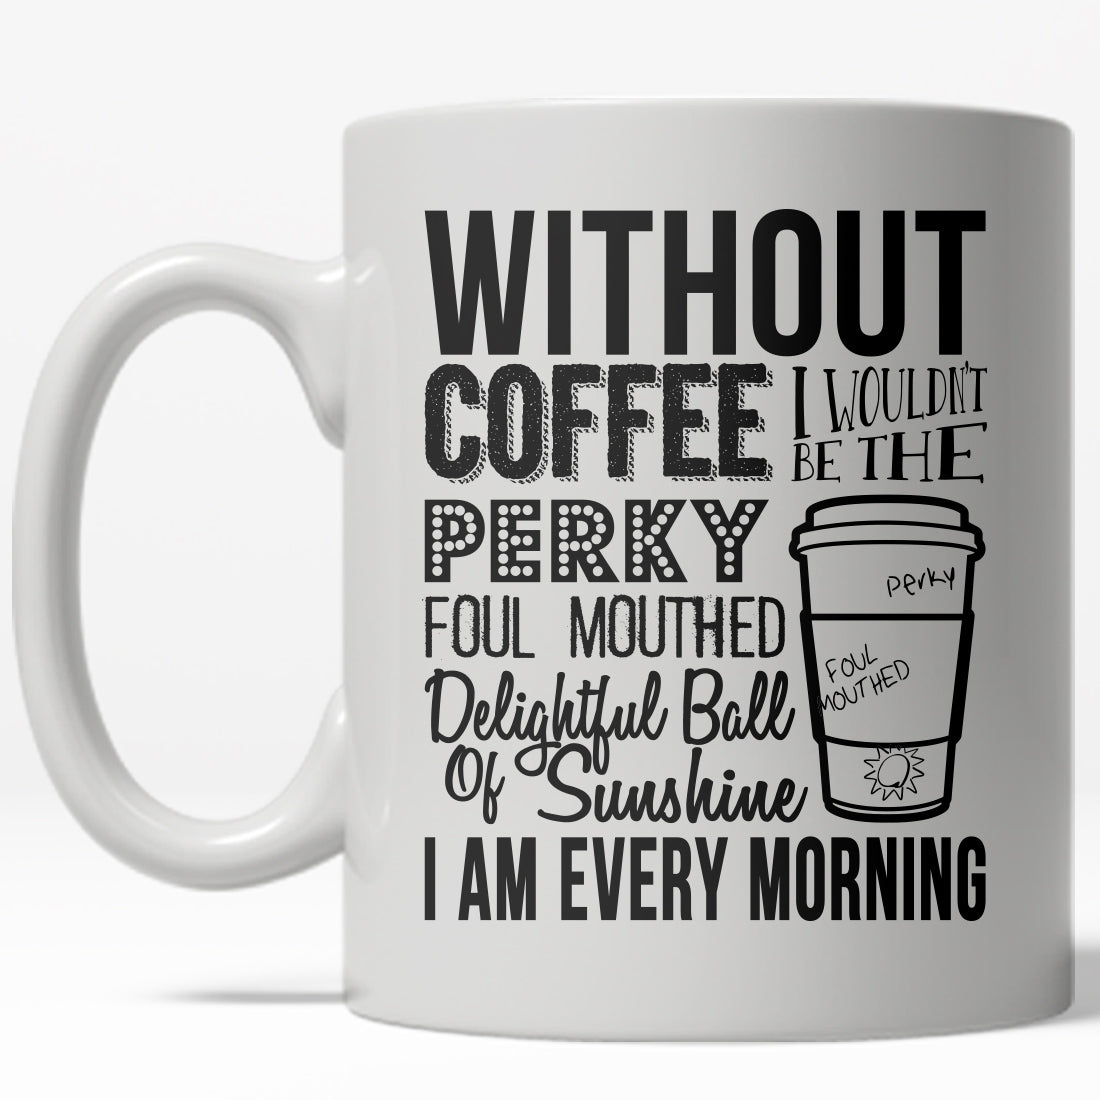 Funny White Perky Ball Of Sunshine Coffee Mug Nerdy Sarcastic Tee